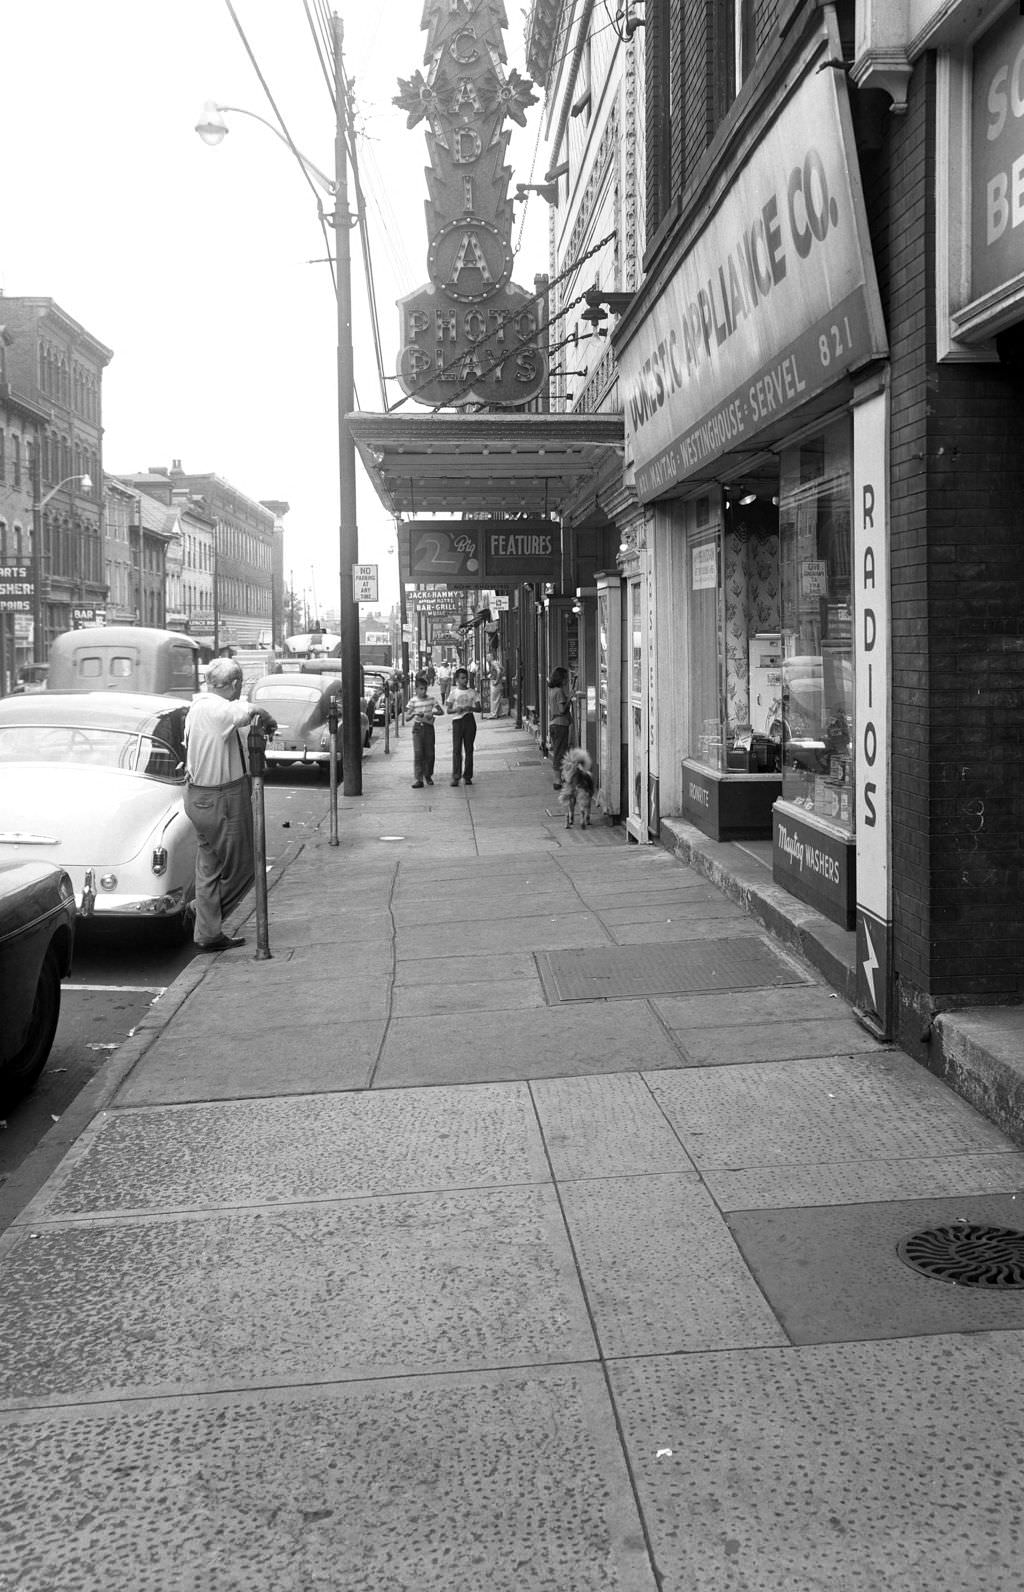 Ohio Street sidewalk featuring Acadia Theater's sign, 1951.